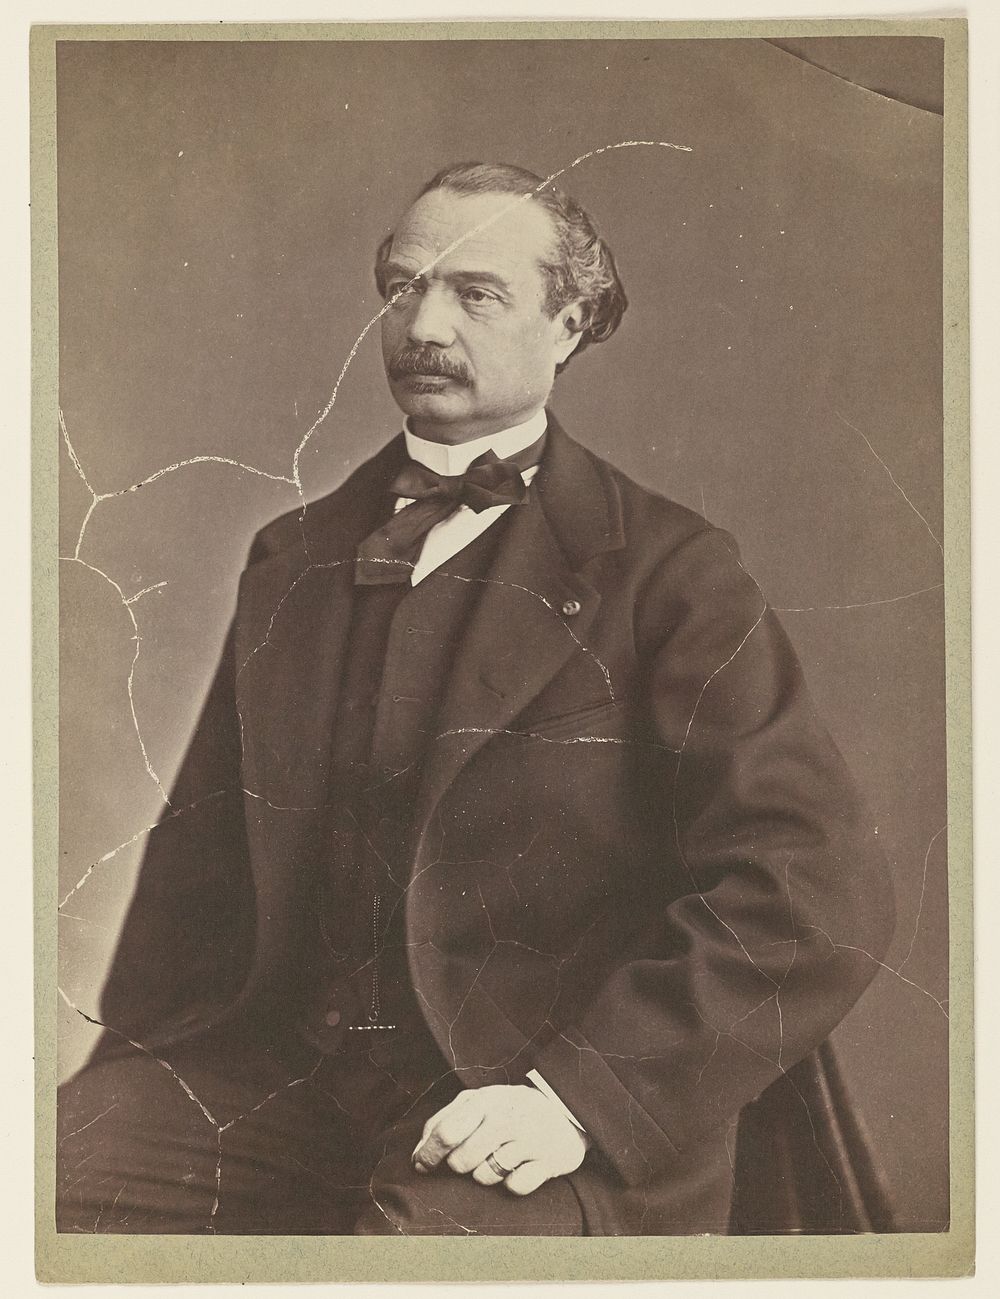 Auguste Maquet by Nadar Gaspard Félix Tournachon